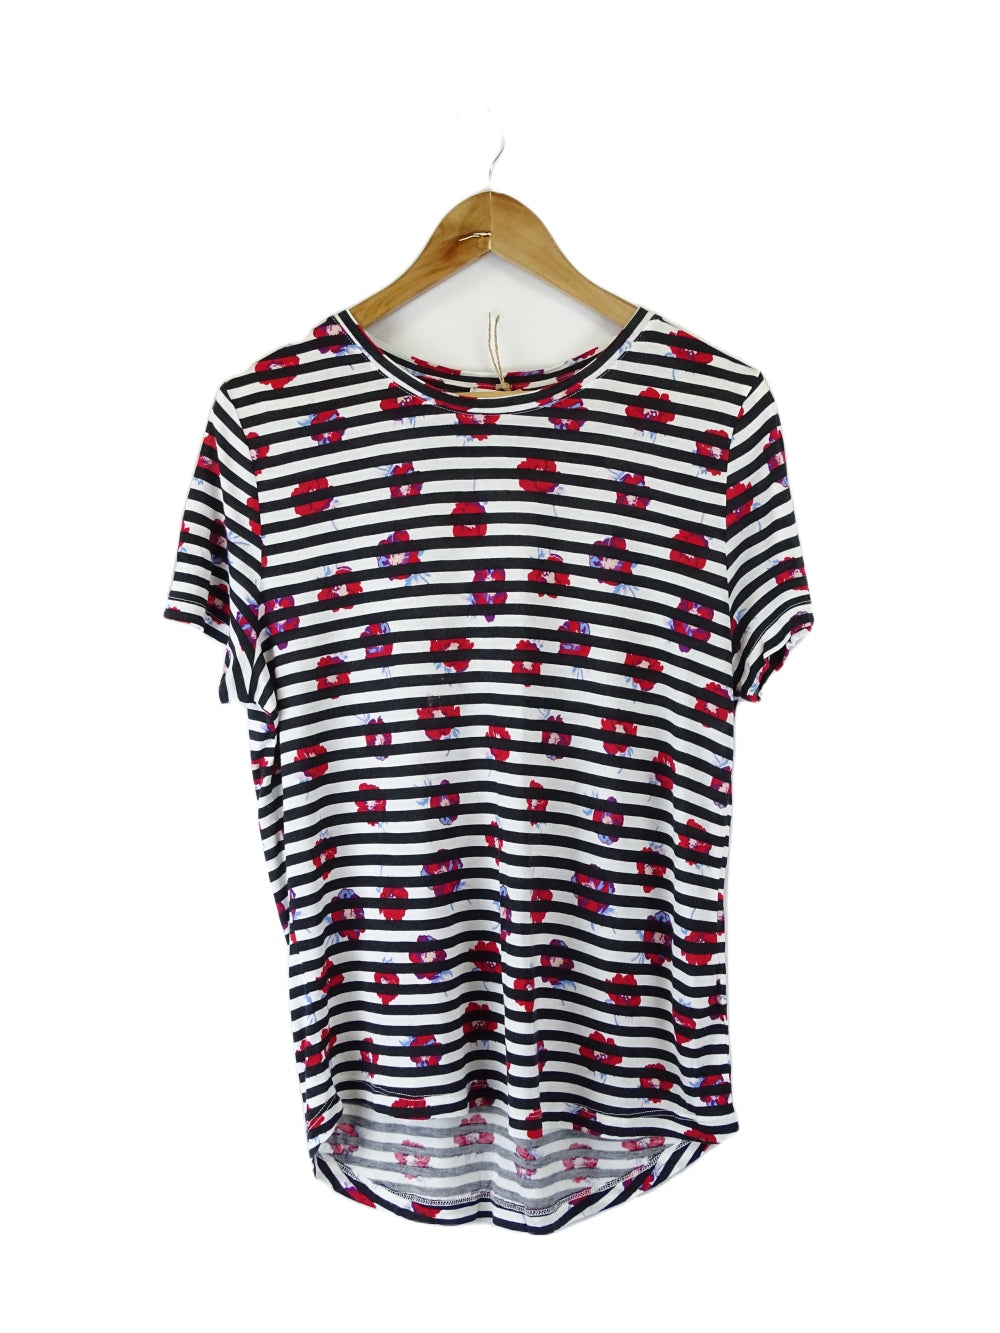 Marcs Black And White Striped T-shirt L